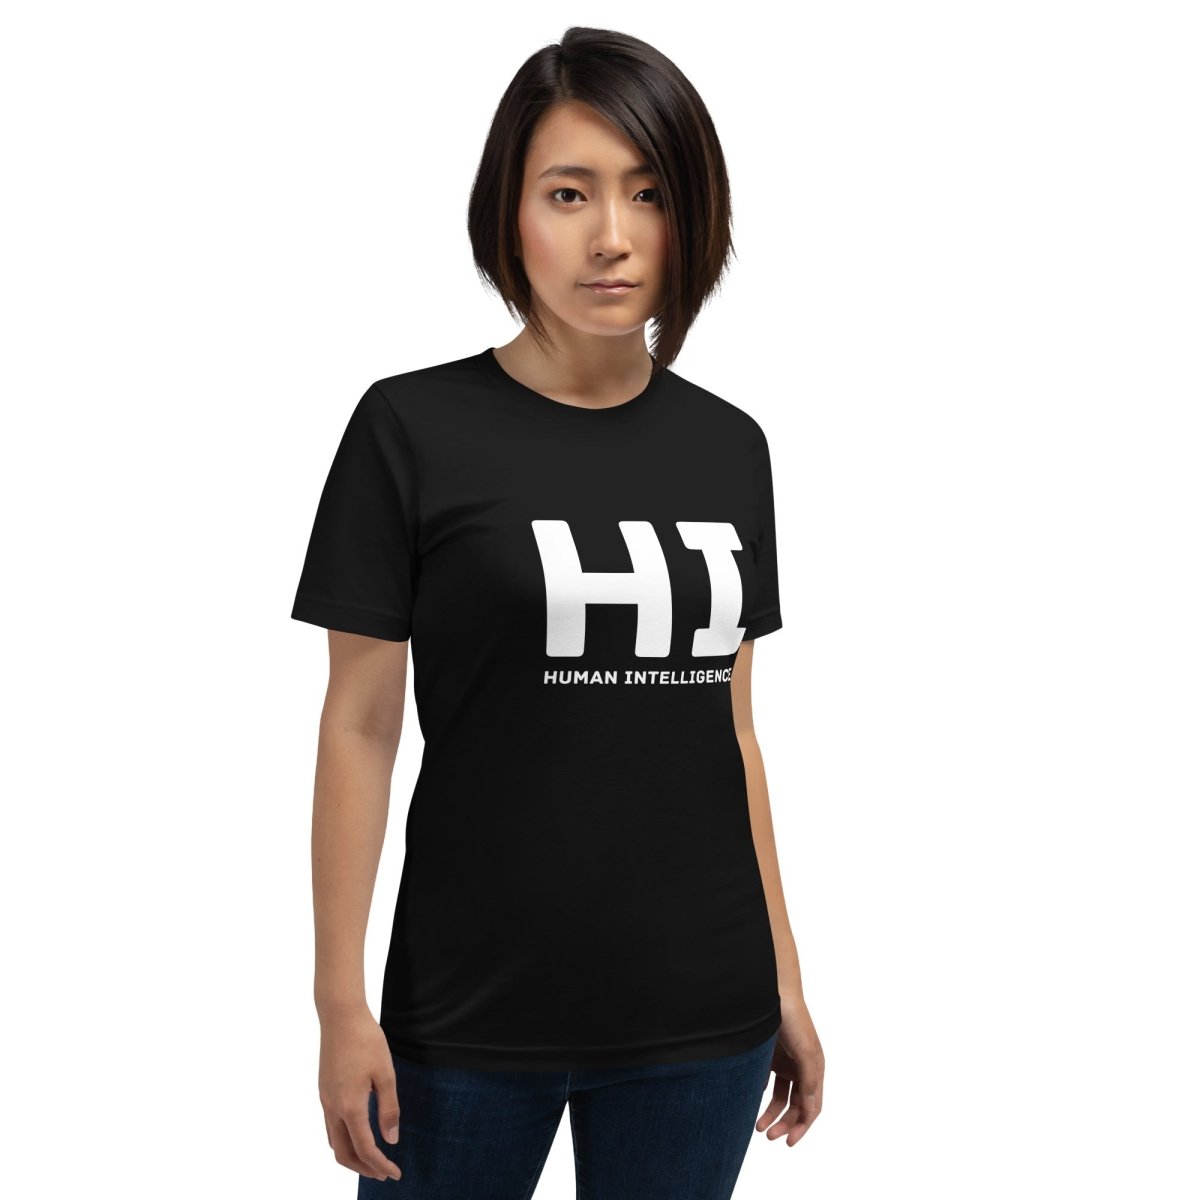 HI Human Intelligence T - Shirt (unisex) - Black - AI Store